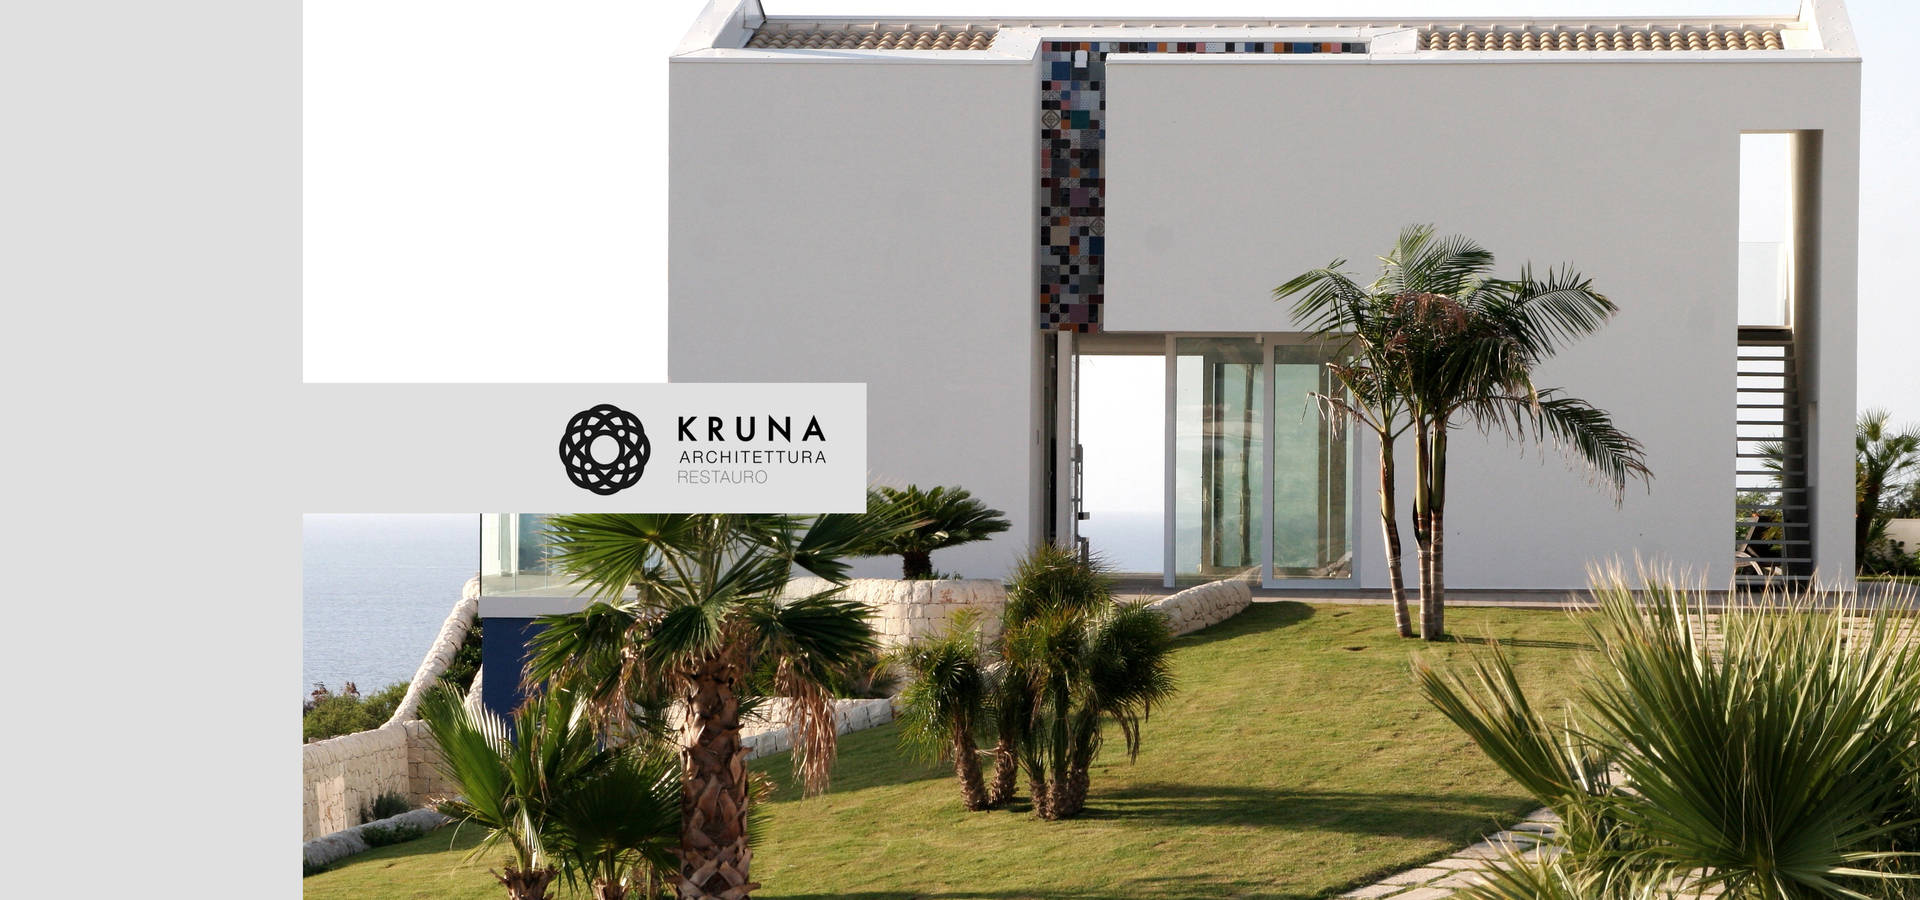 KRUNA – Architettura Restauro